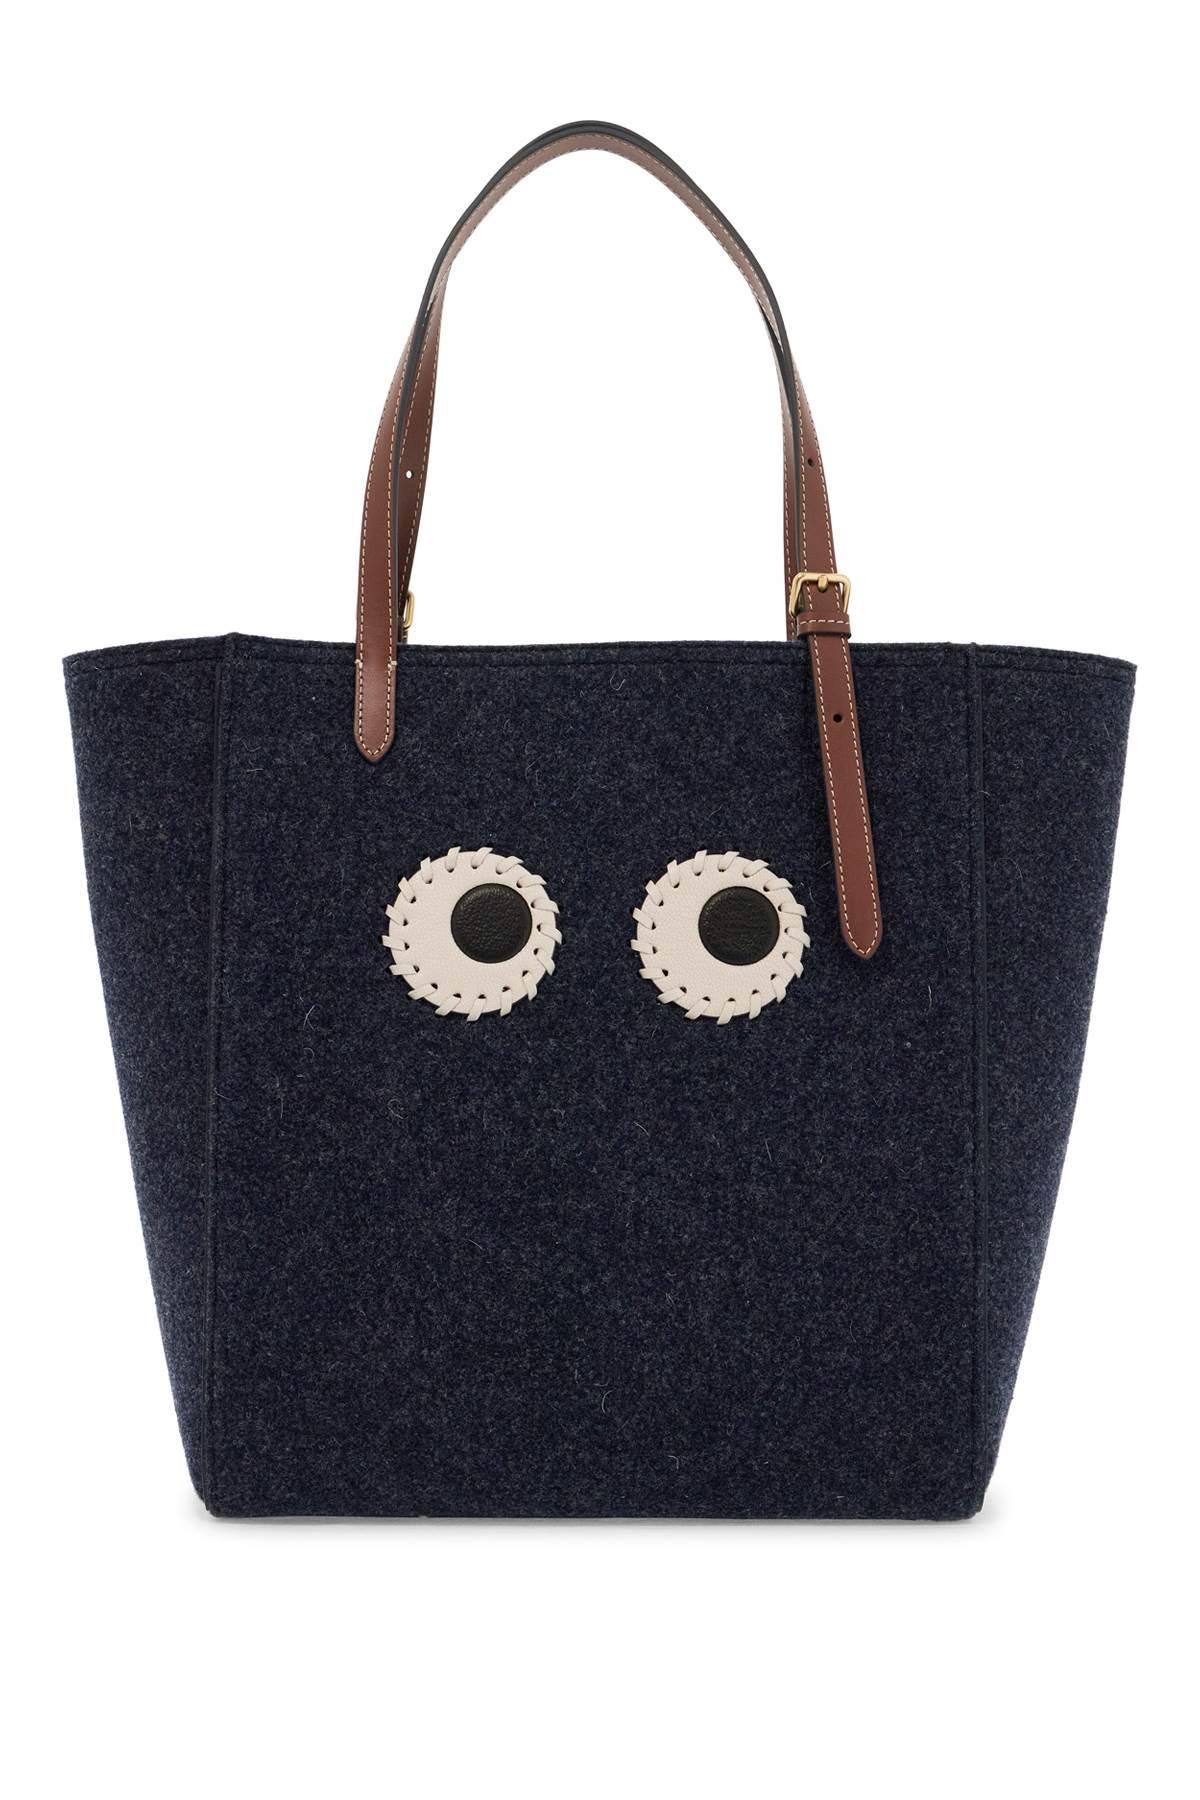 Felt Tote Bag With Eyes Design